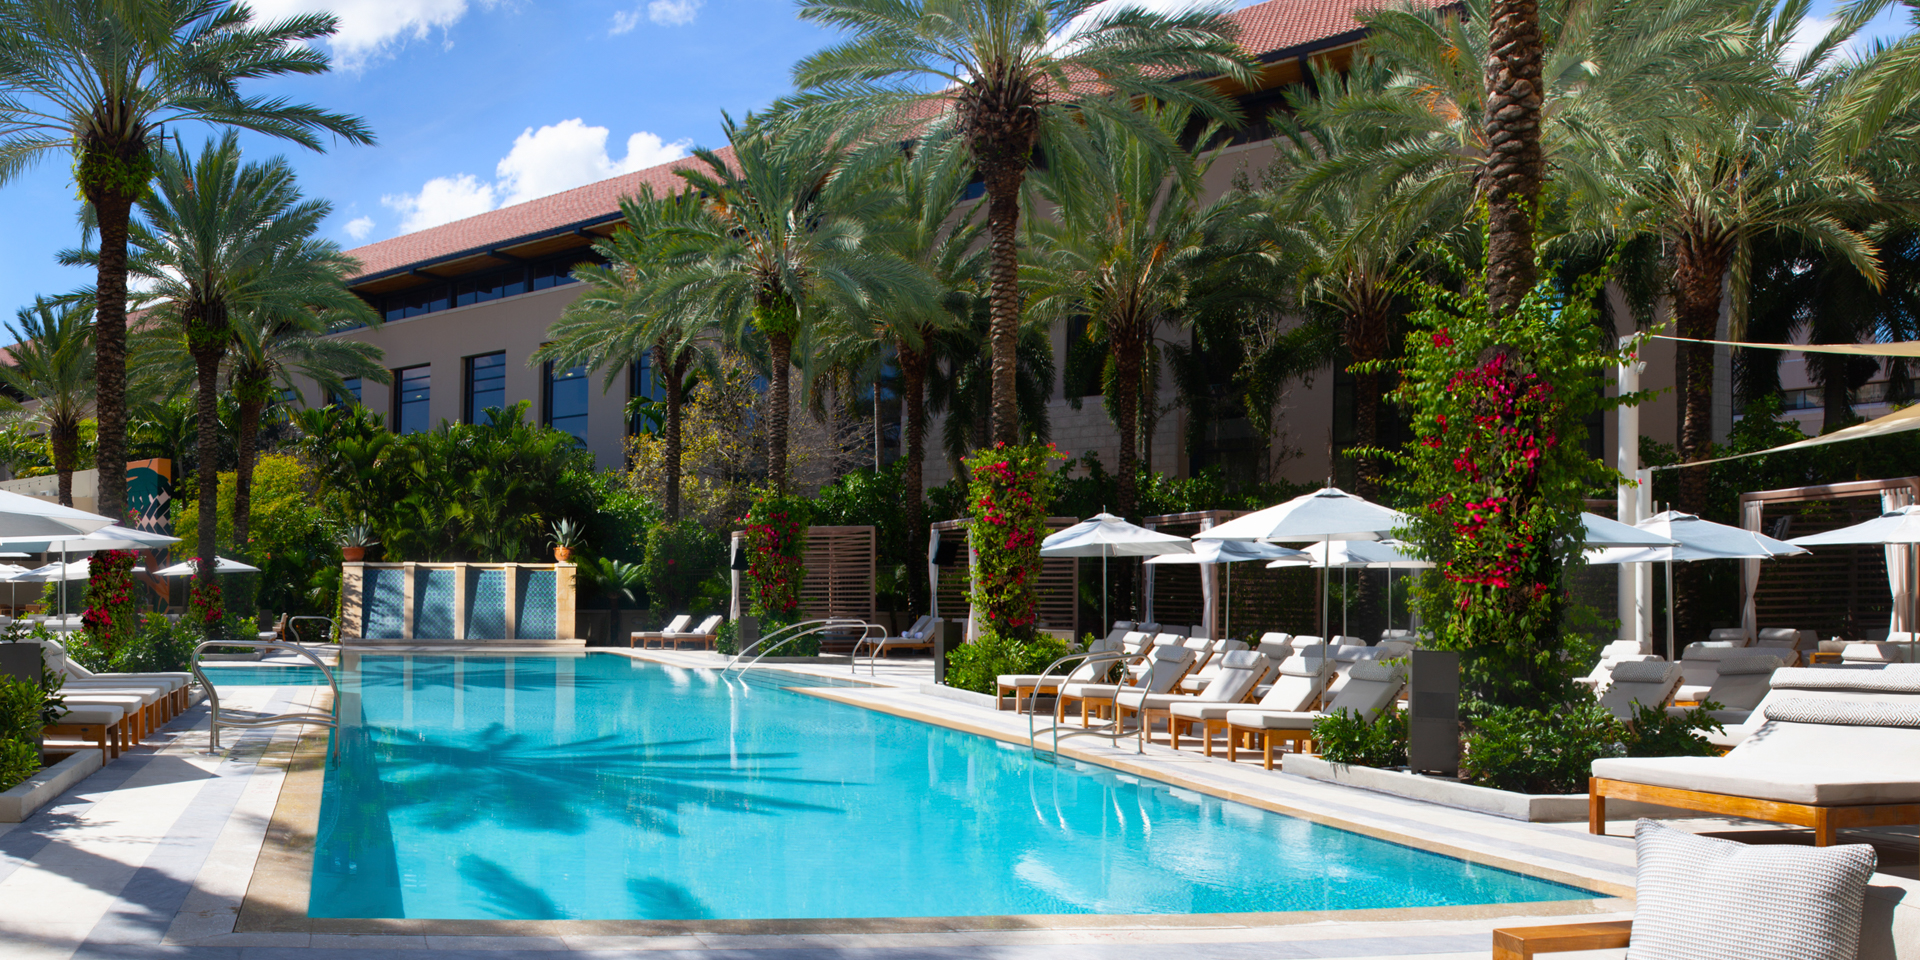 Hilton West Palm Beach pool deck